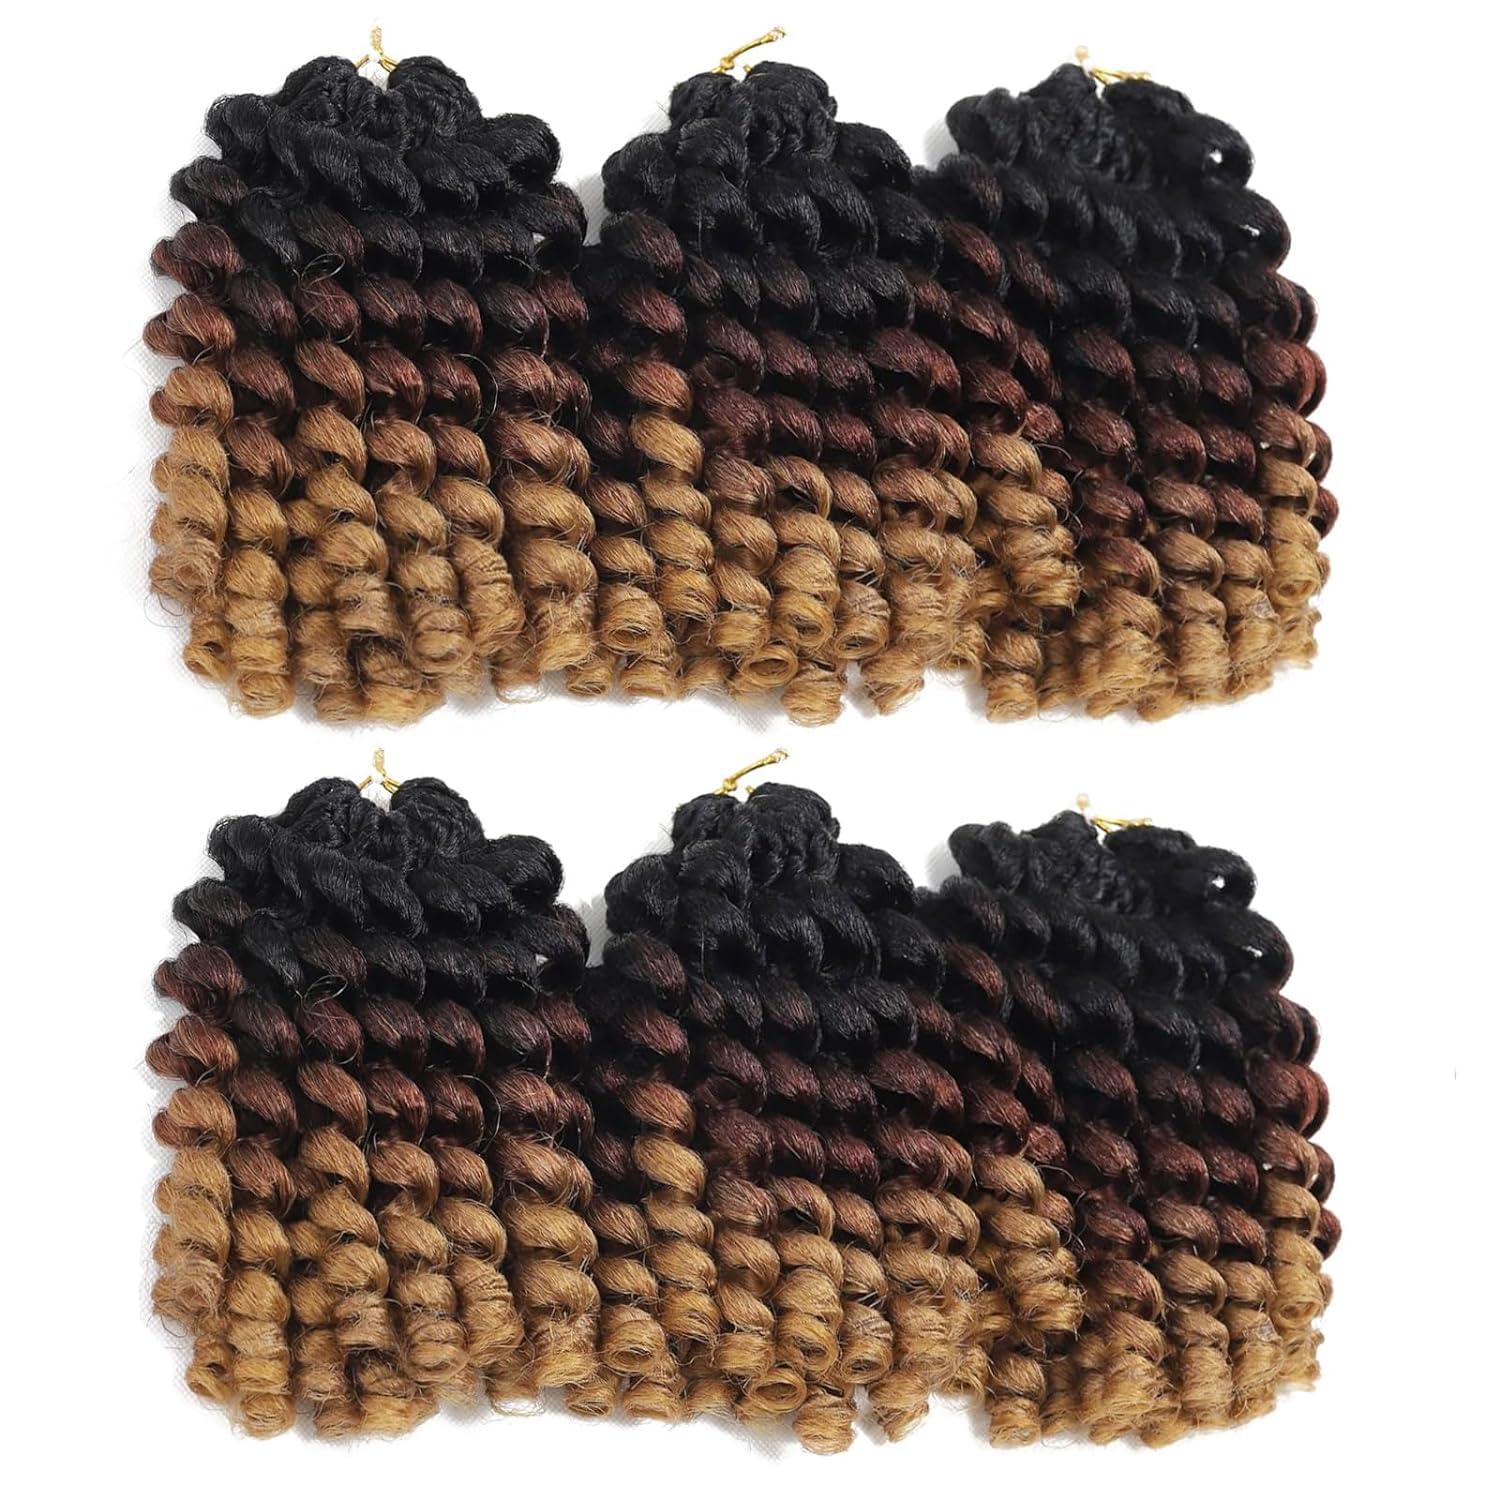 FAST SHIPPING 3-5 DAY WC | Toyotress Wand Curl Crochet Hair - 6 Packs Jet Black Jamaican Bounce Crochet Hair, Short Bob Curly Crochet Braids Bouncy Curls Synthetic Braiding Hair Extensions